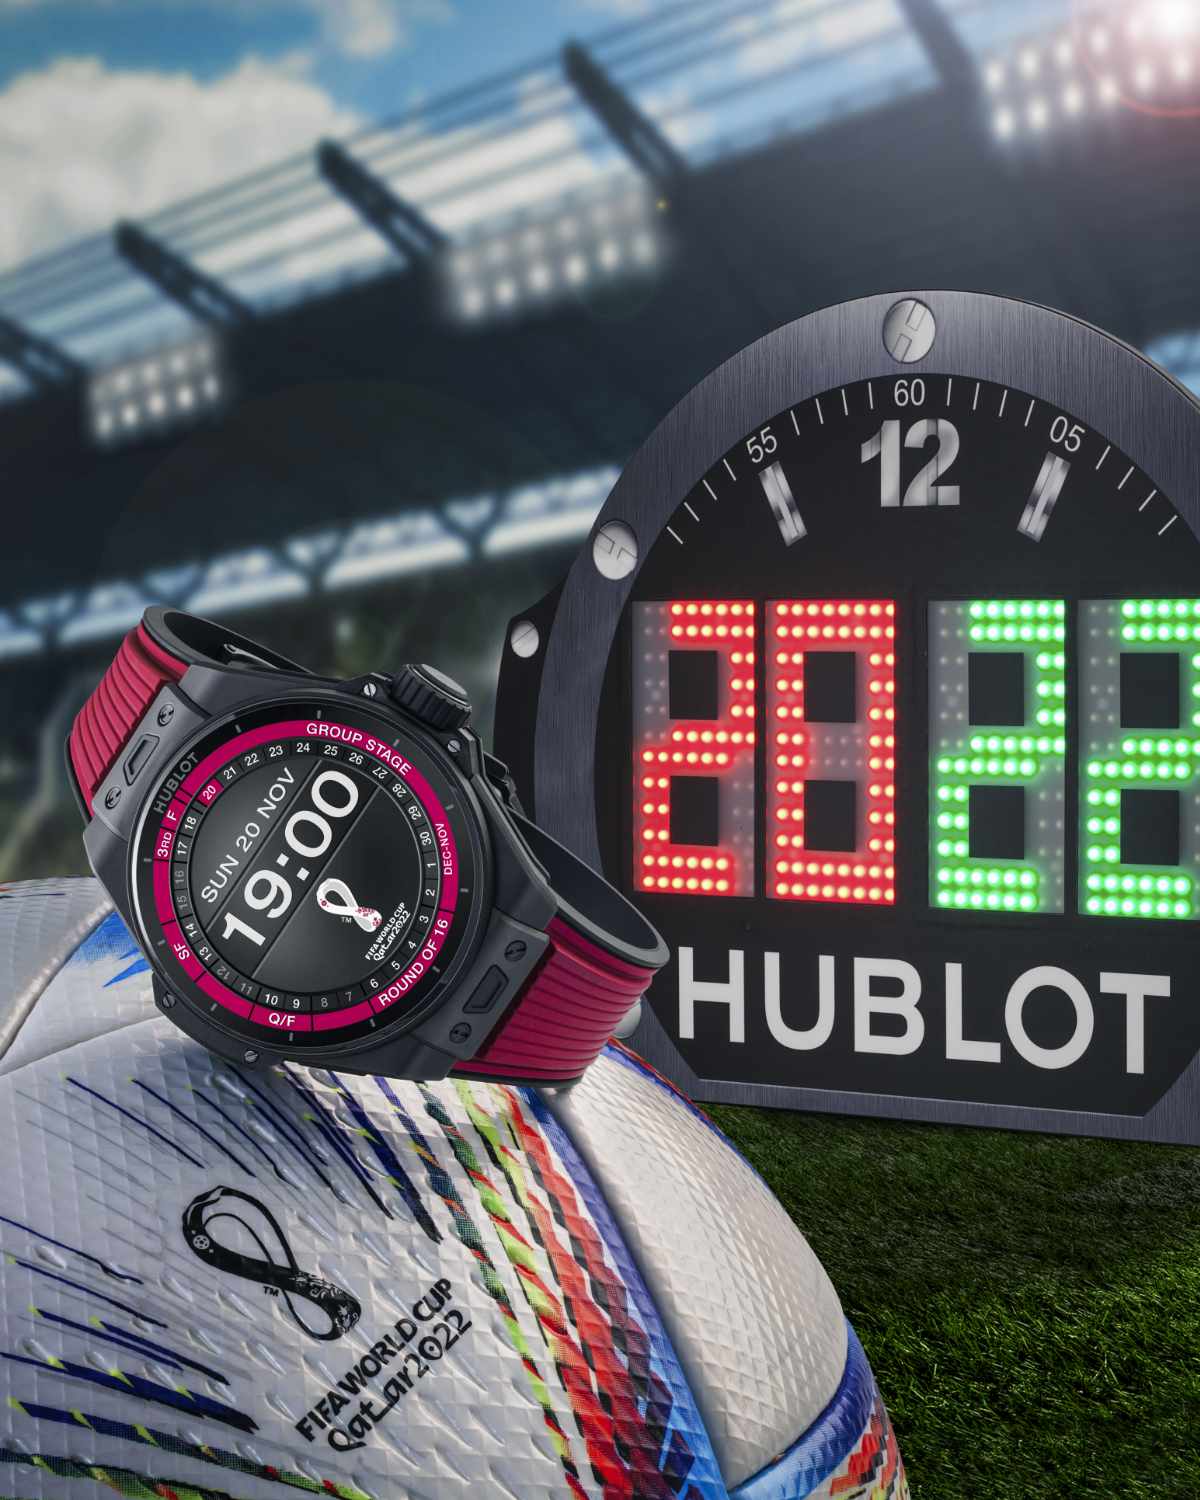 Hublot - Welcome to the 2022 Hublot Loves Football kick